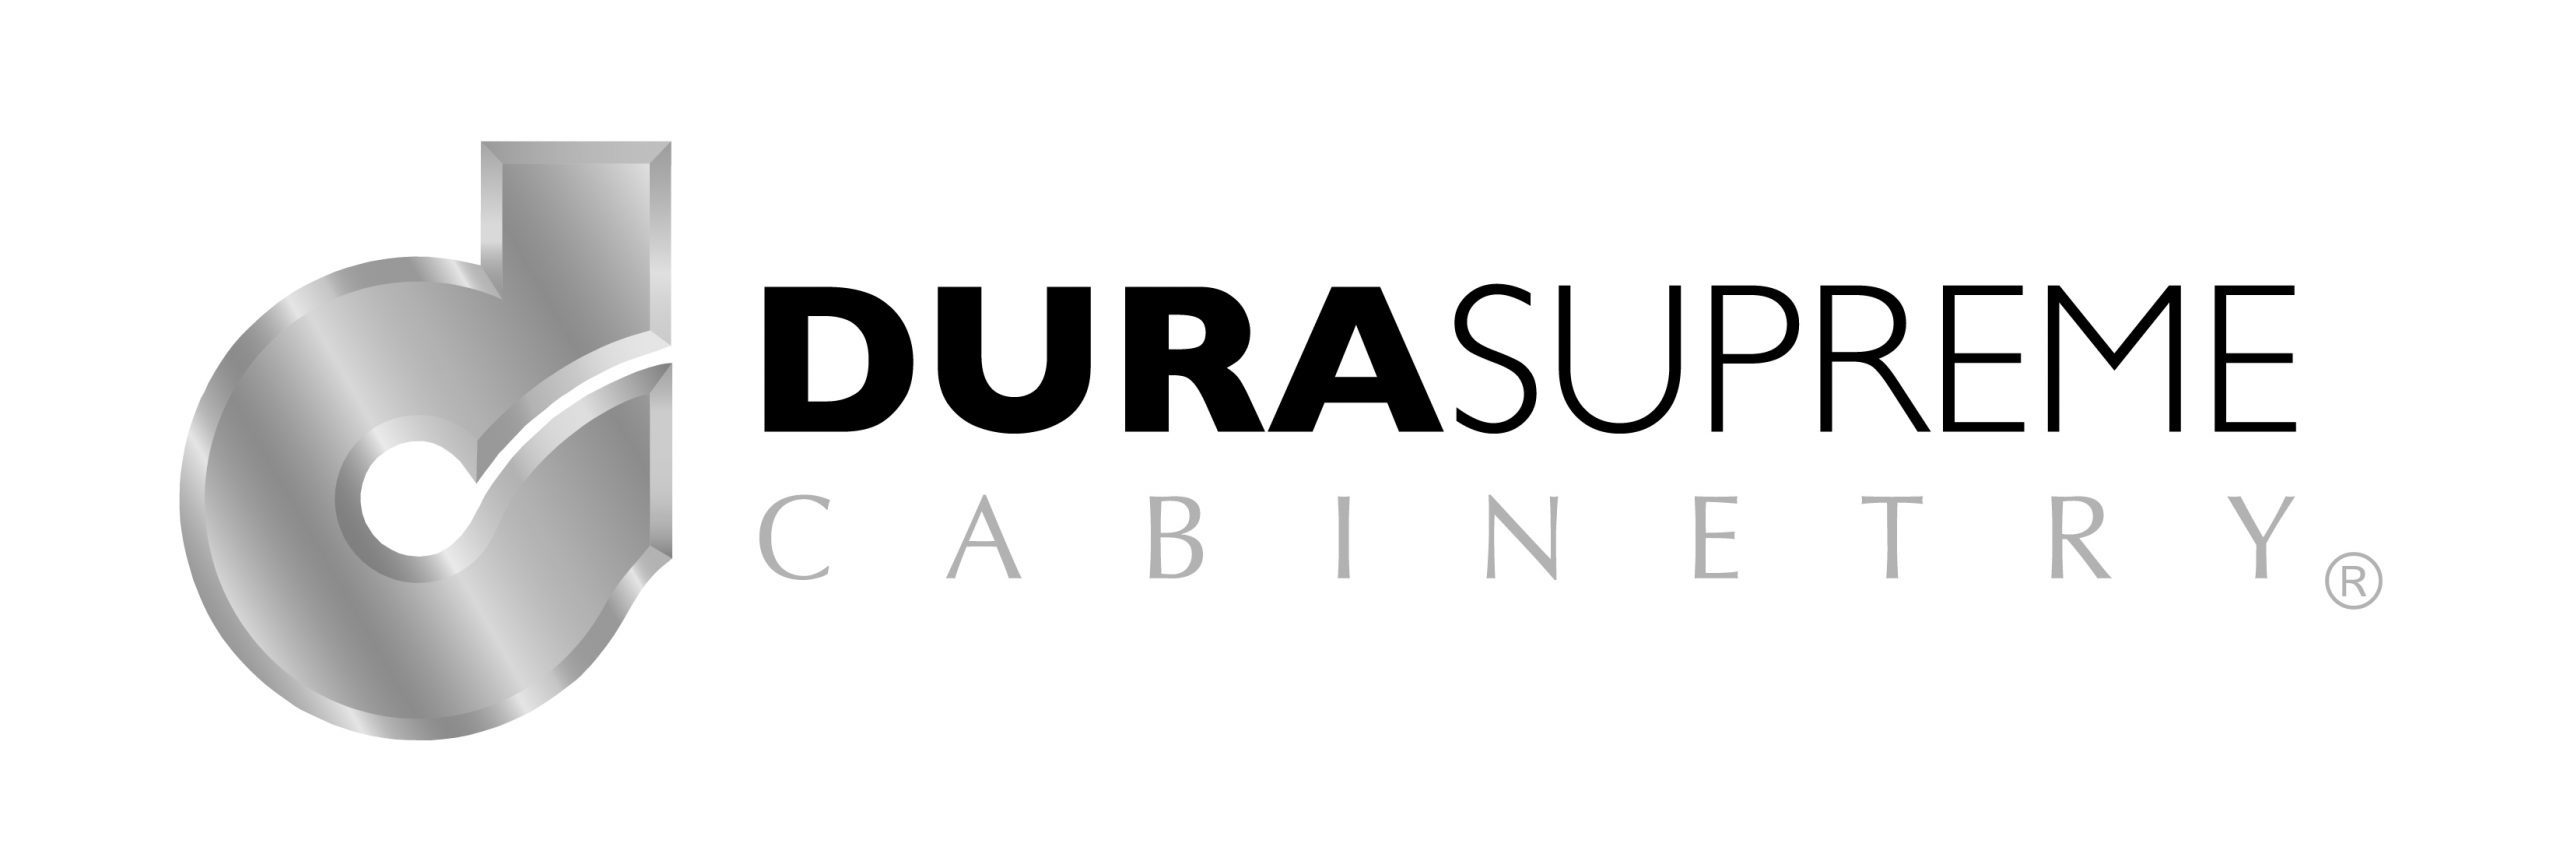 DURASUPREME Cabinetry logo